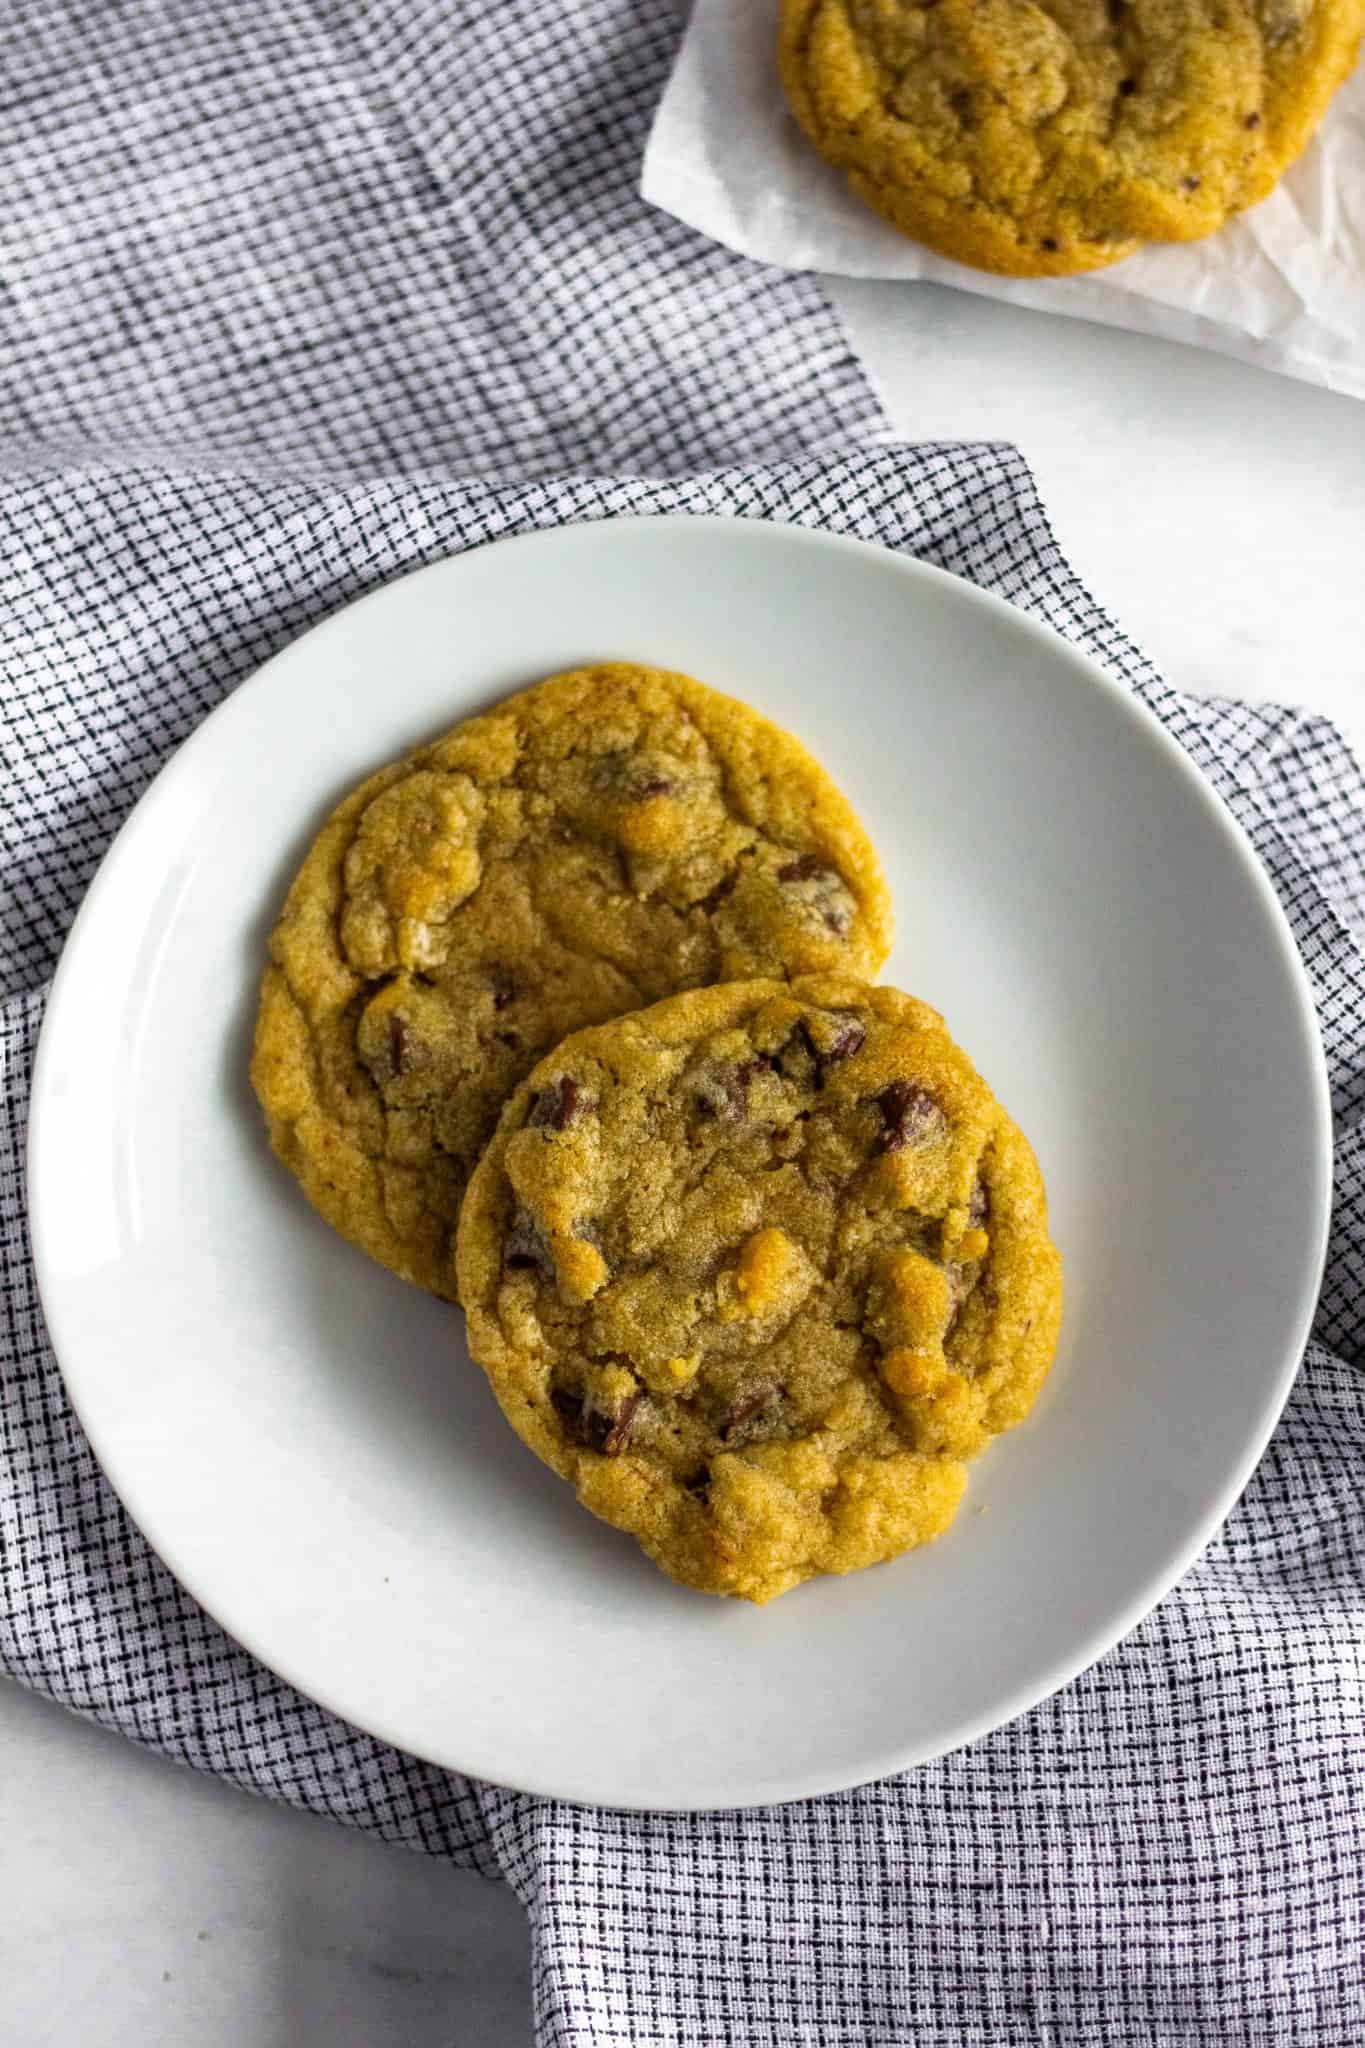 The Best Chocolate Chip Cookies #chocolatechipcookies #tararochfordnutrition